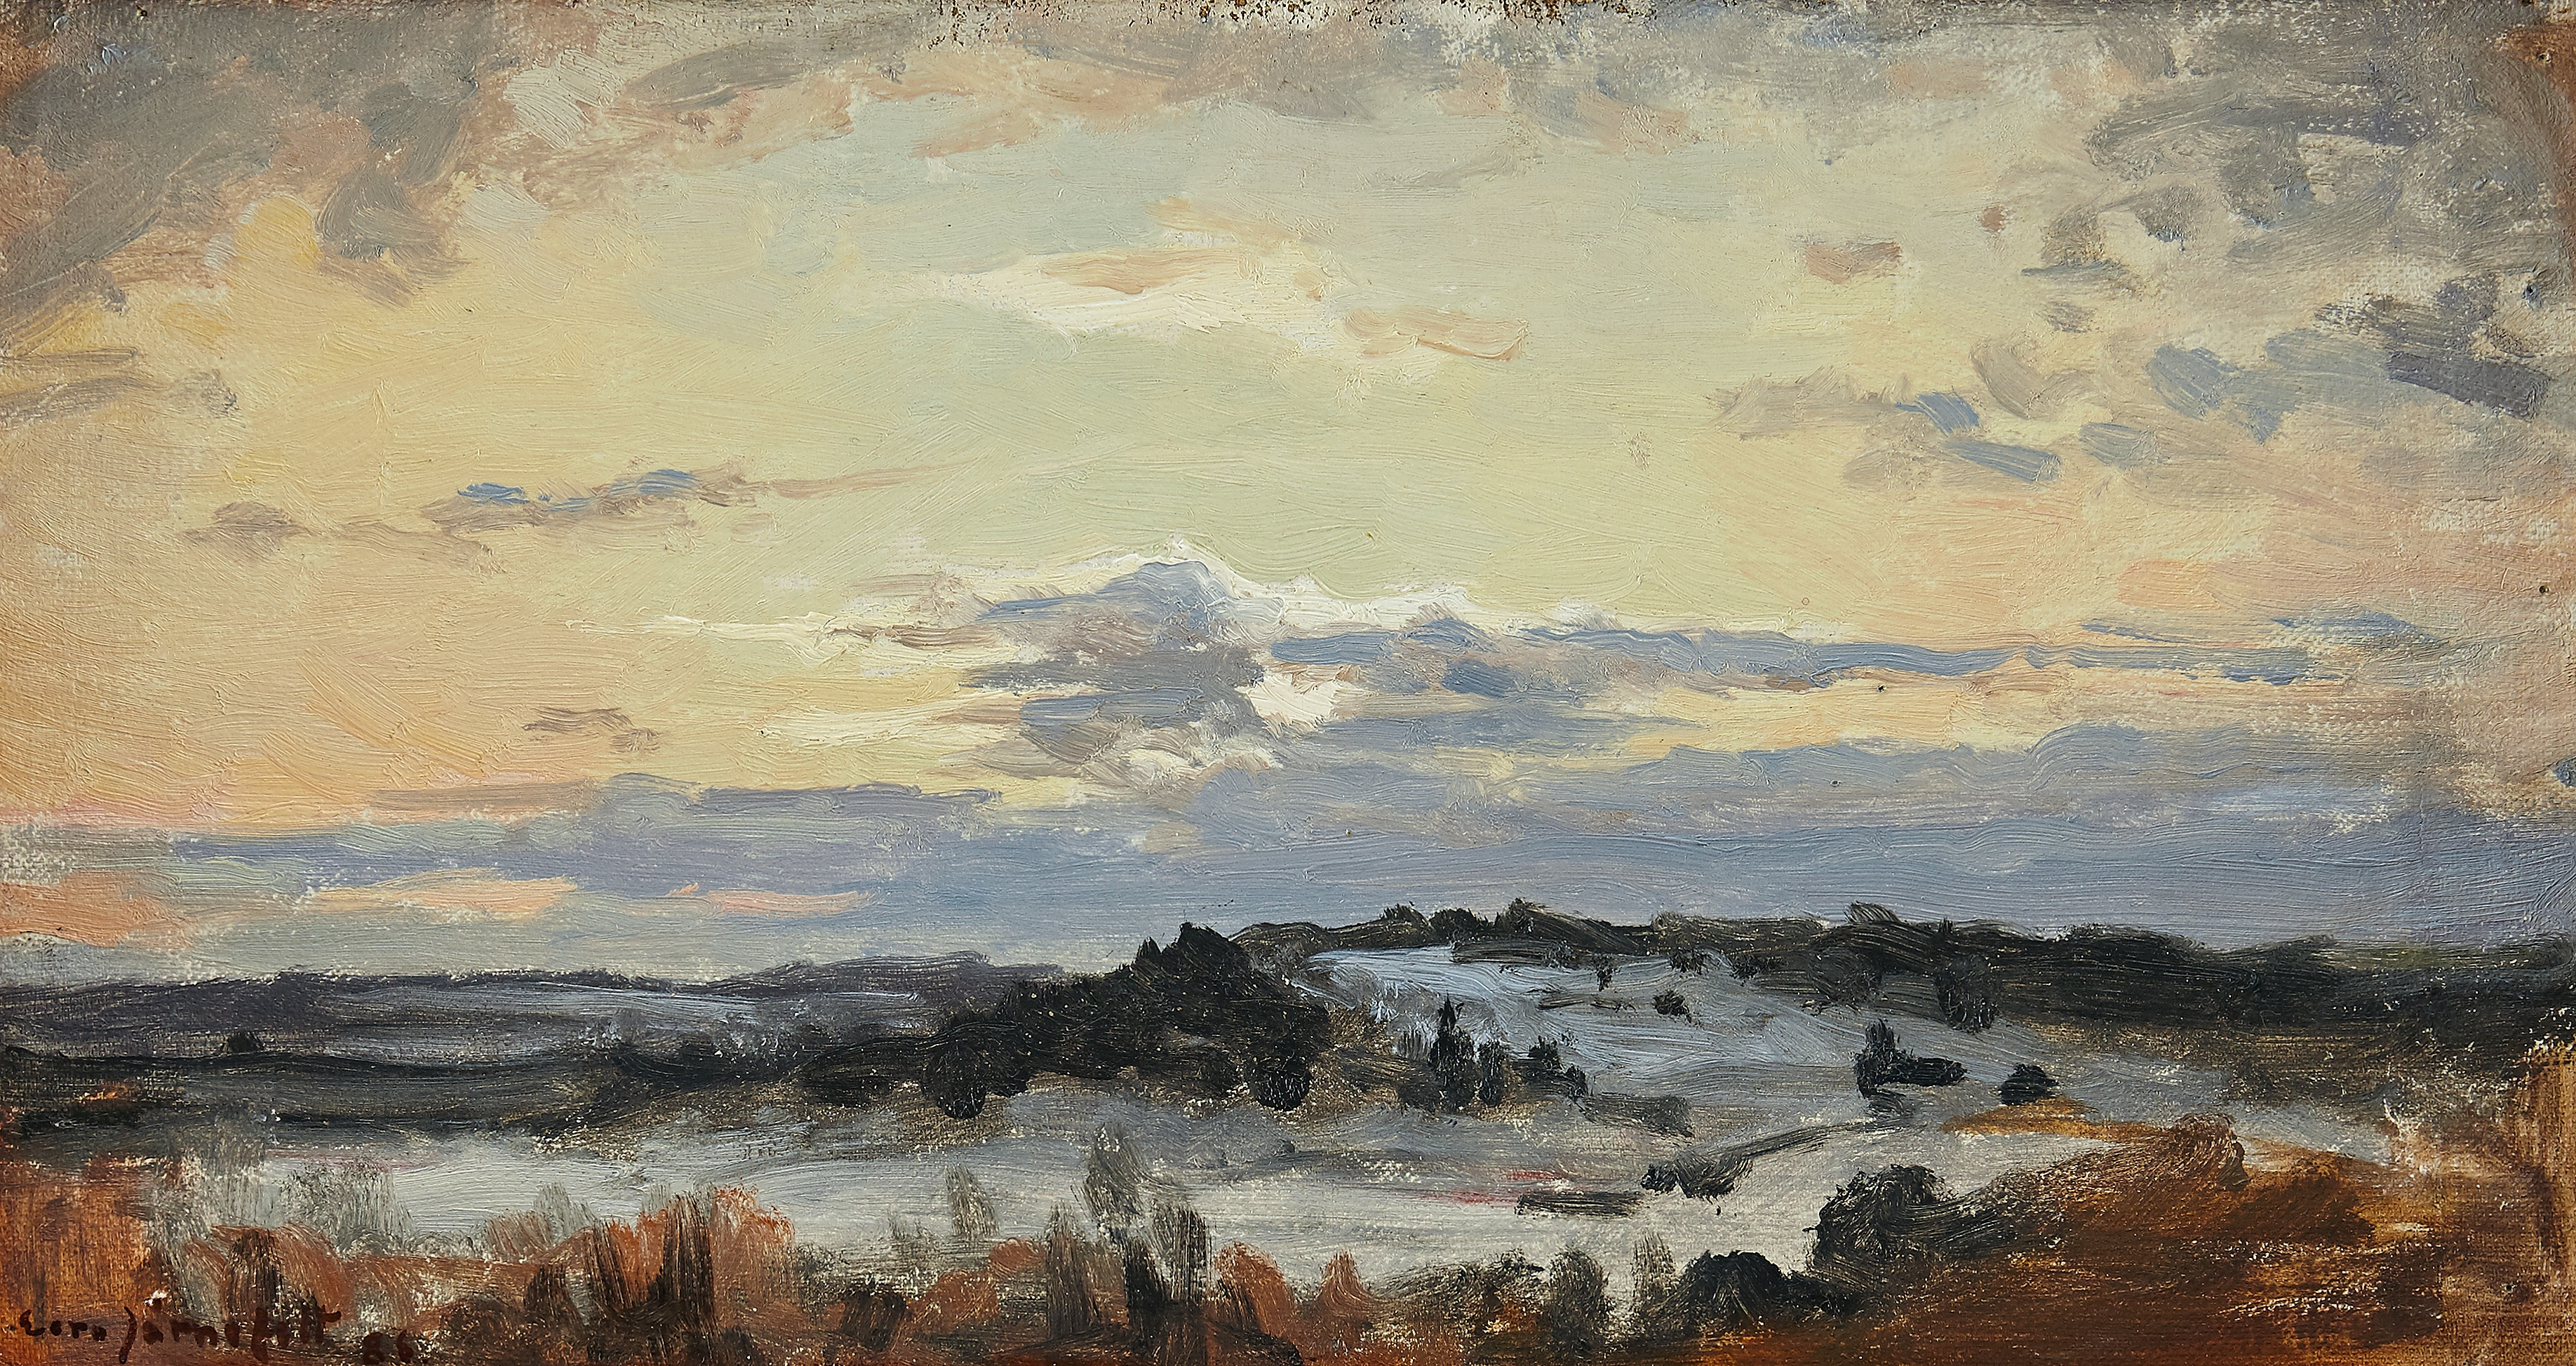 Artwork by Eero Järnefelt, Extensive winter landscape, Made of Oil on canvas laid on panel